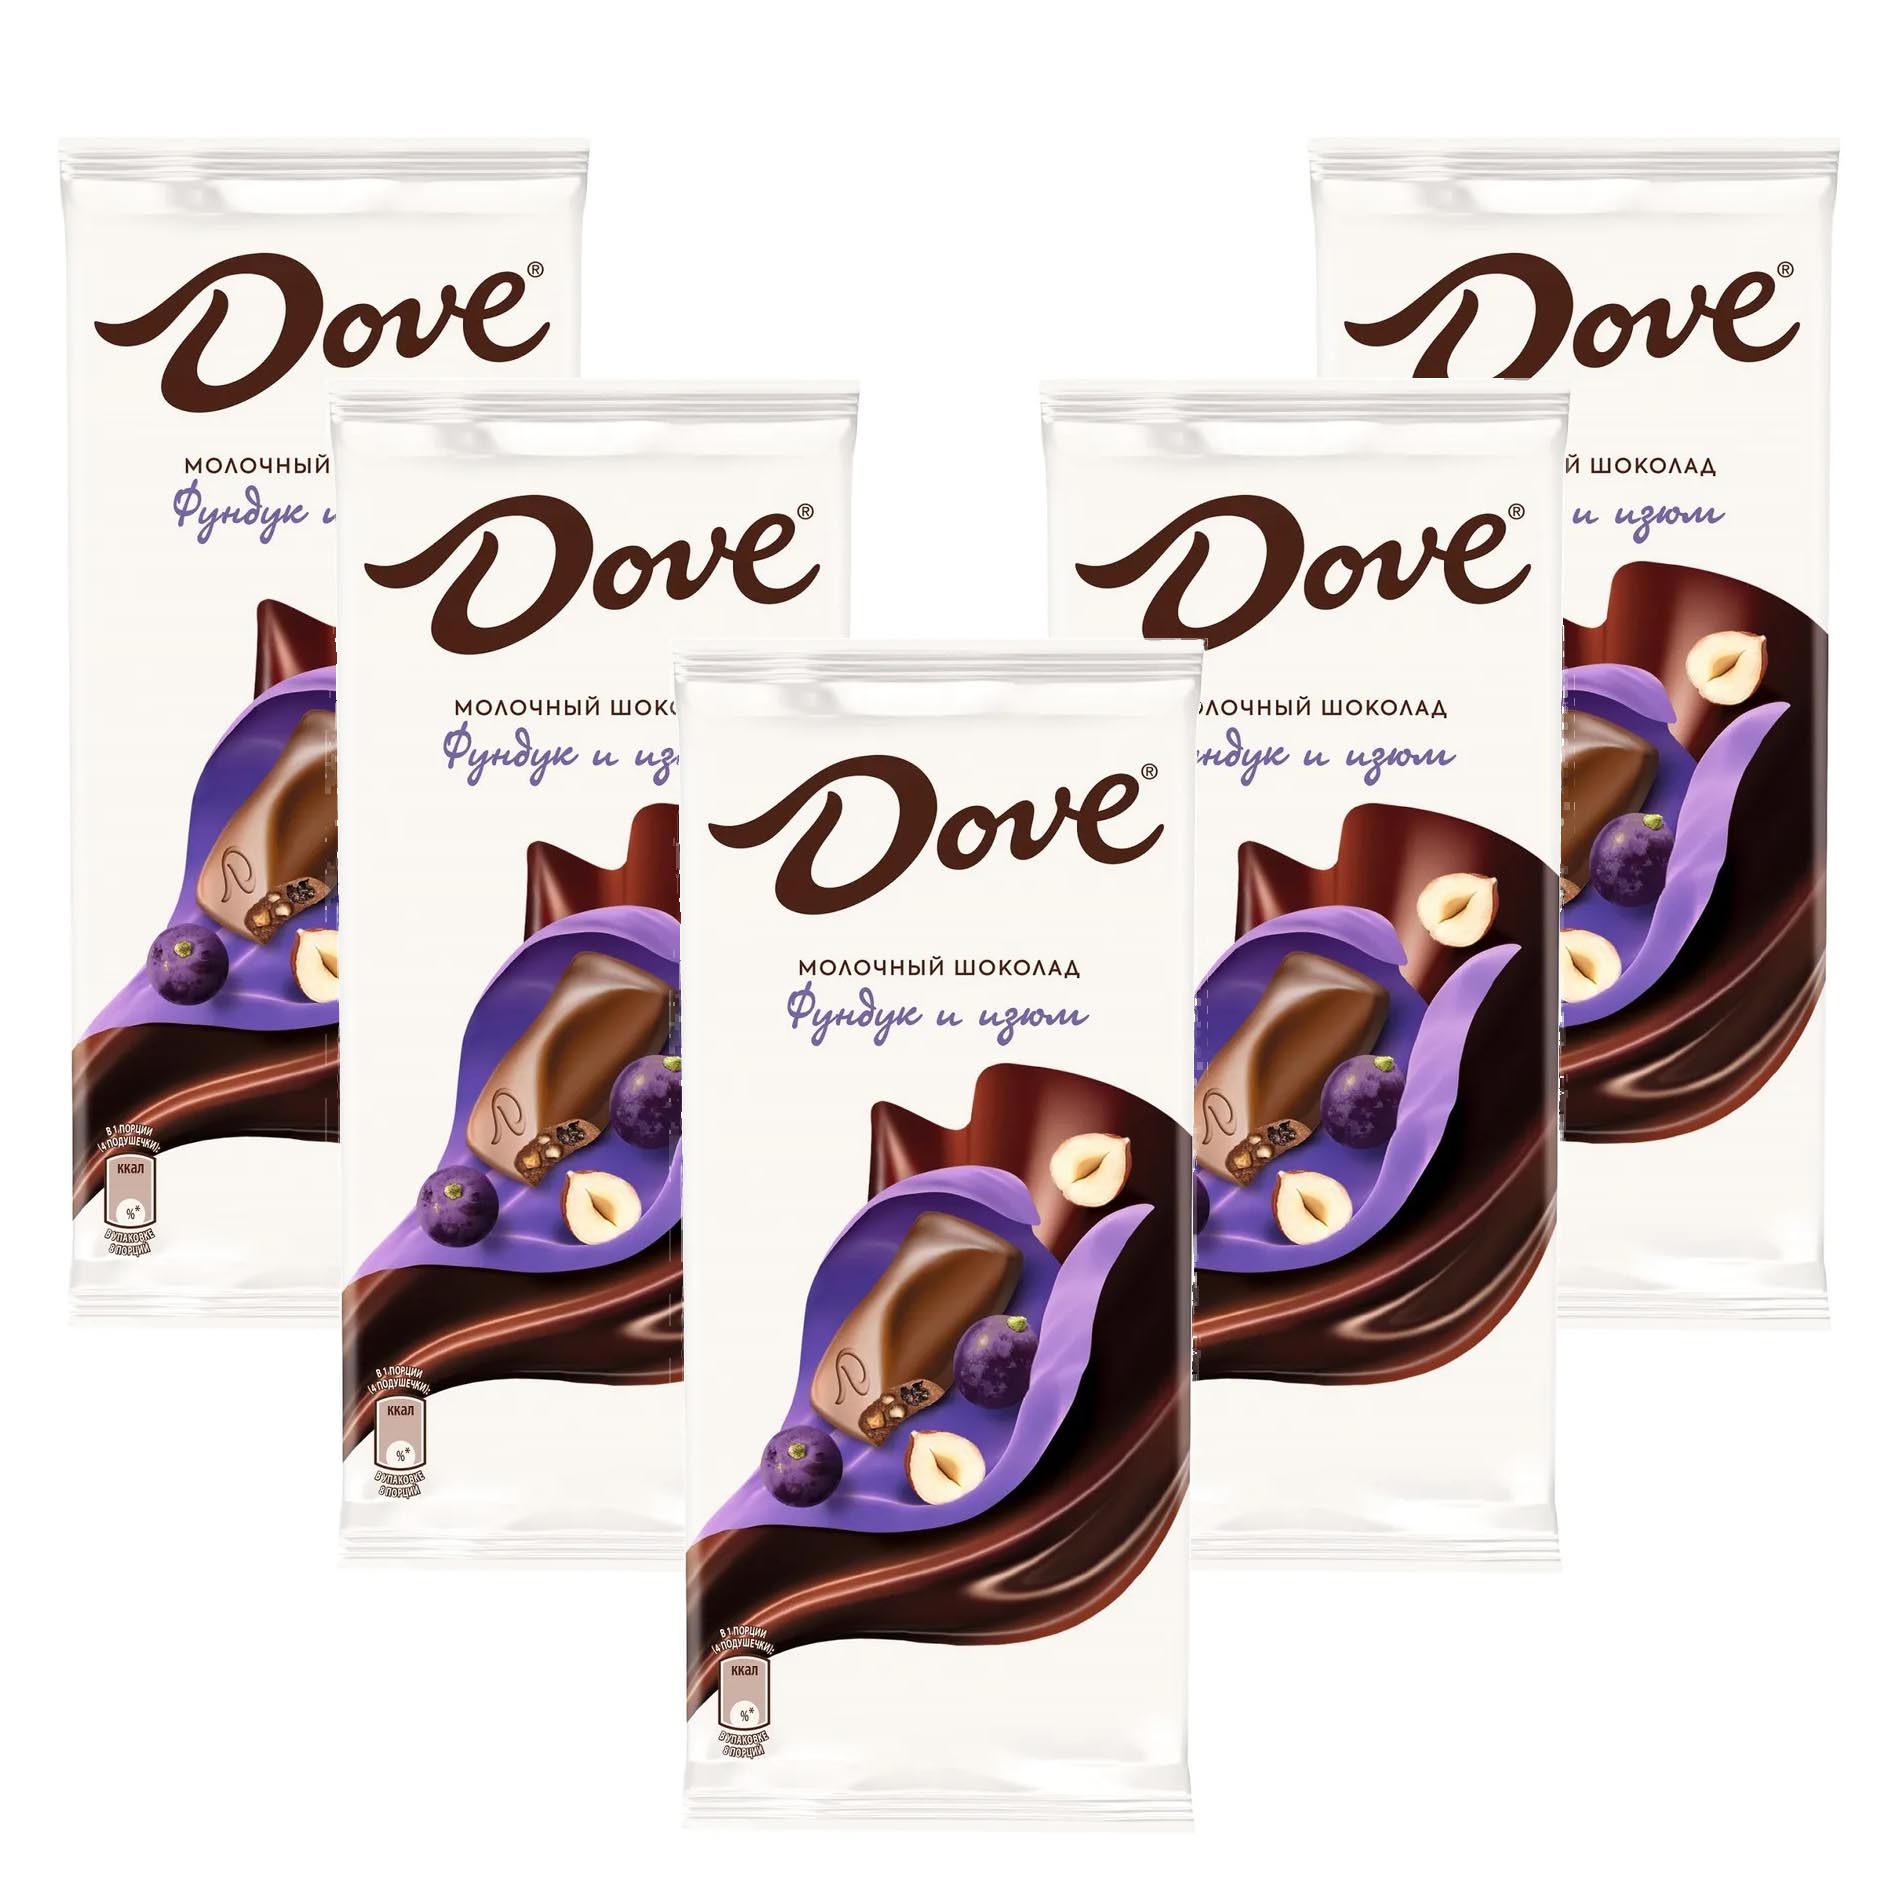 Молочный шоколад Dove, Фундук, изюм, Флоу-пак, 90гр * 5шт.